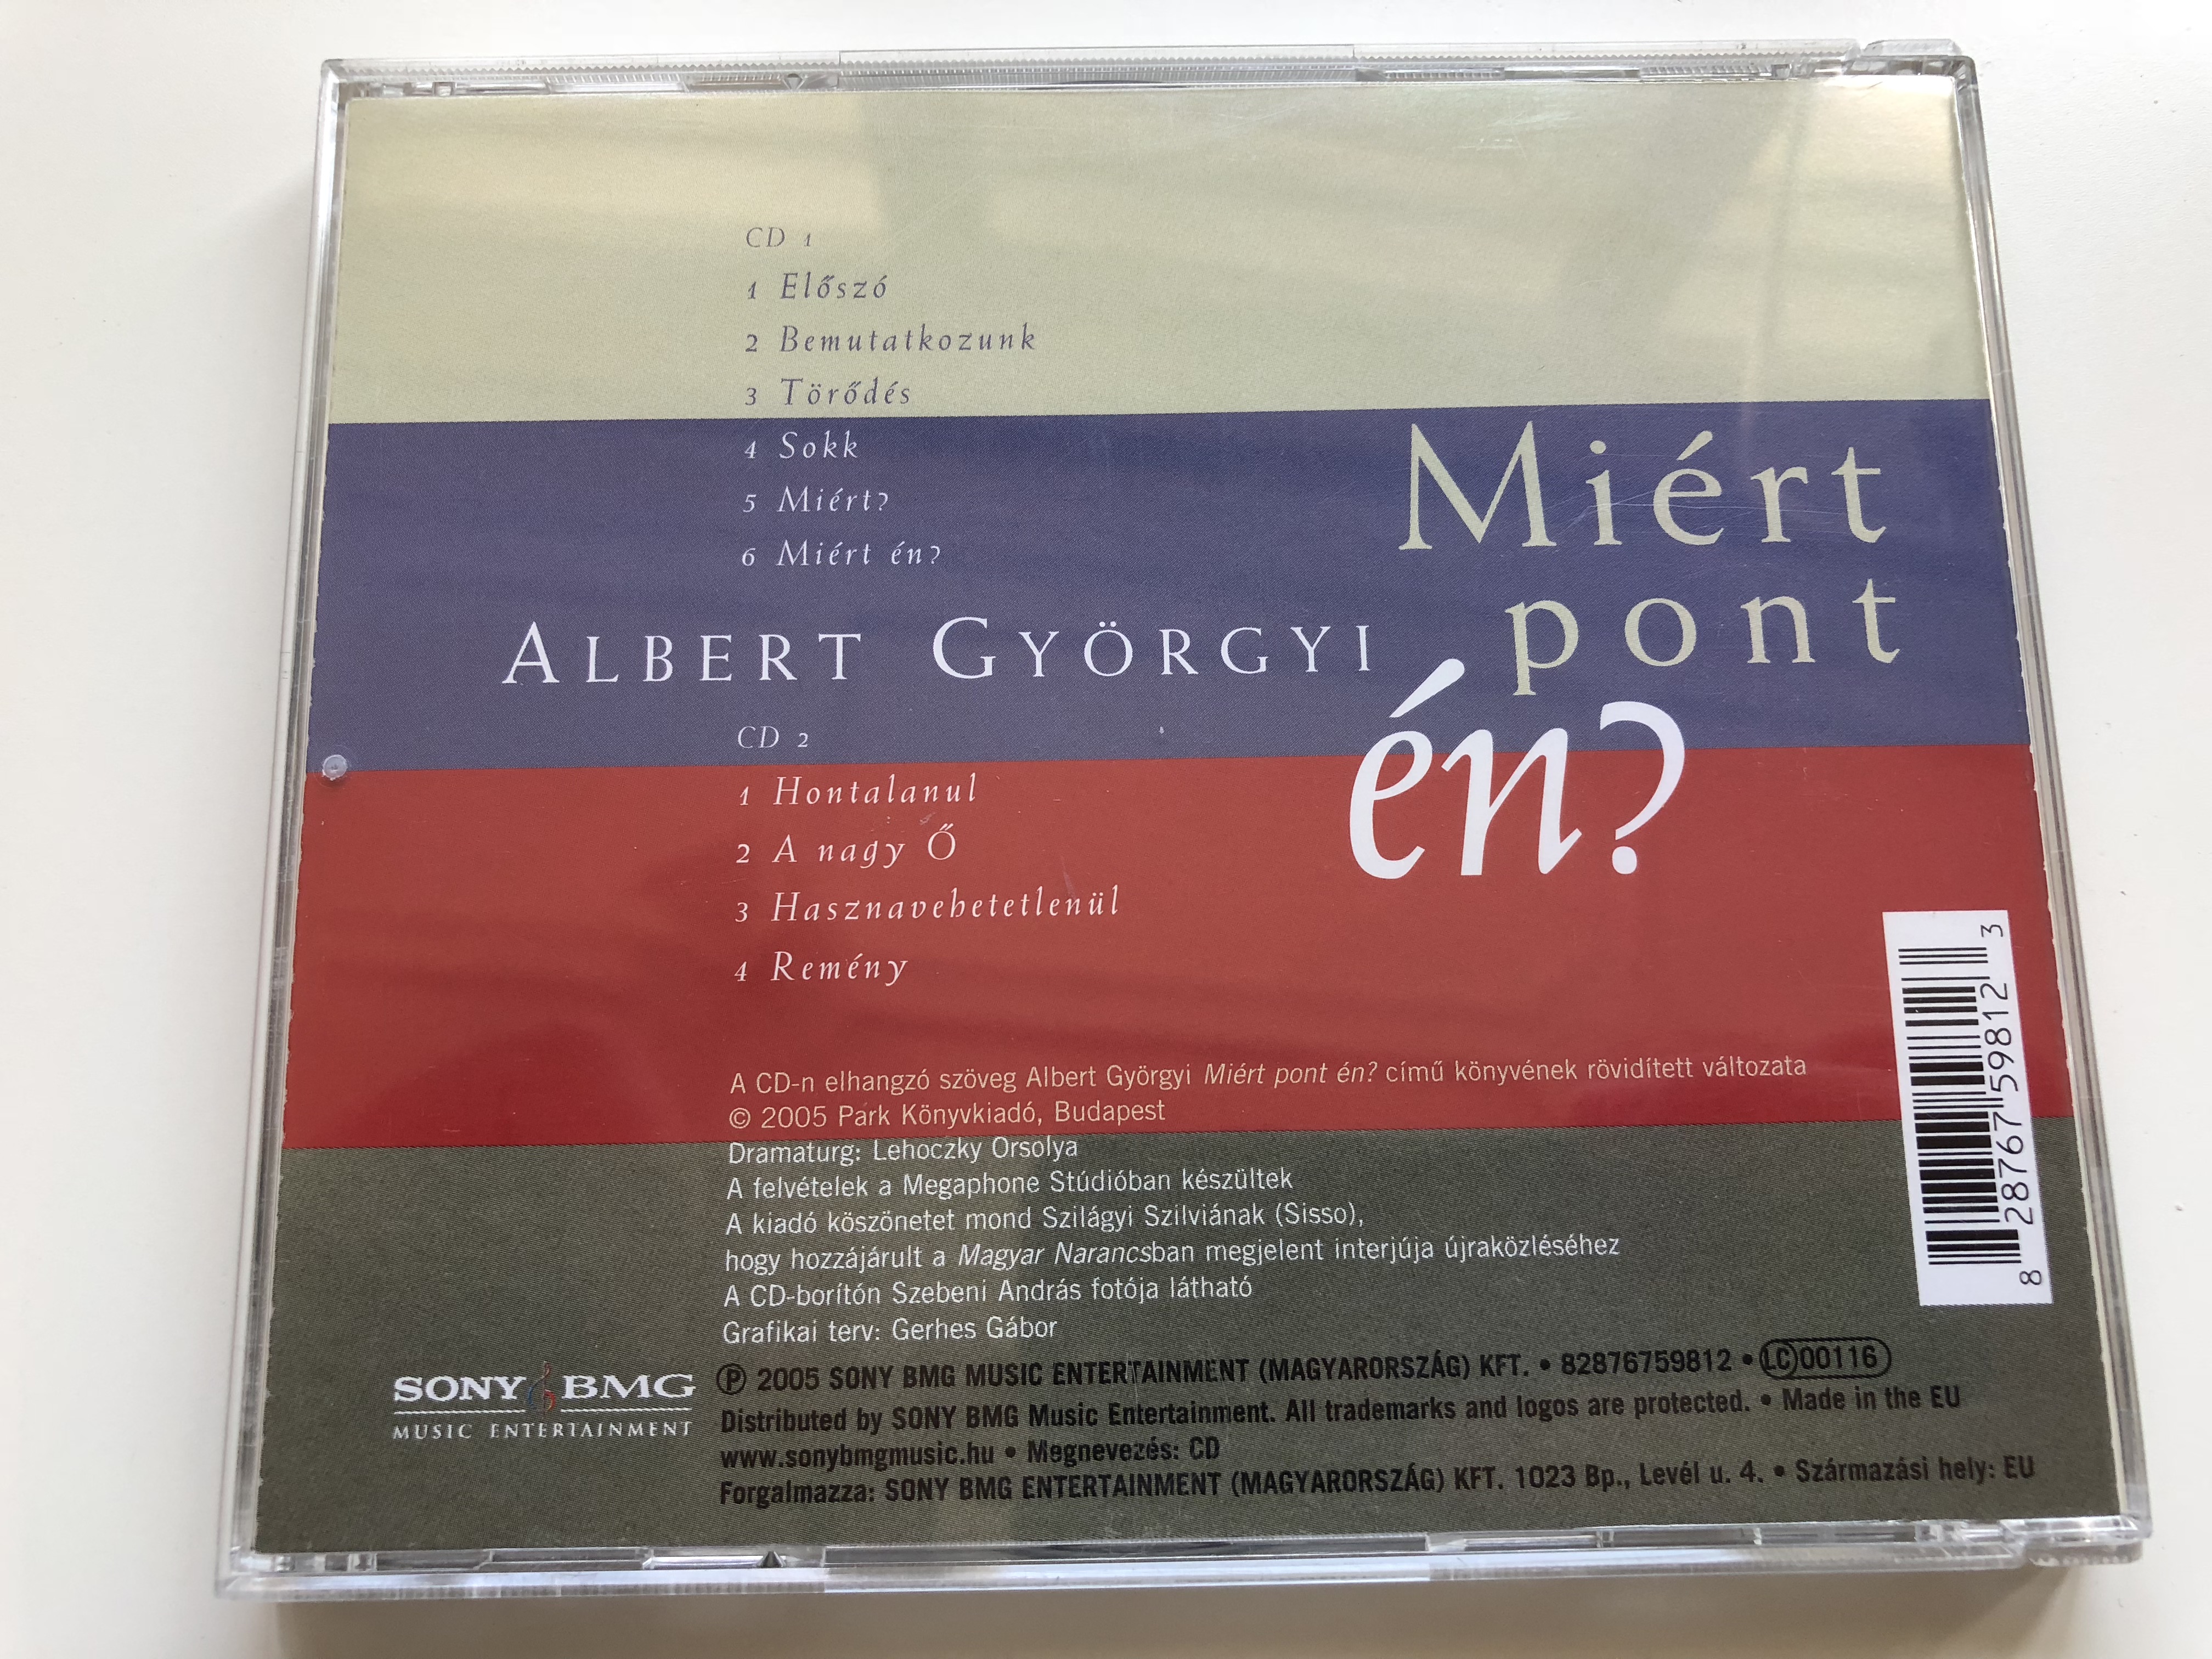 albert-gy-rgyi-mi-rt-pont-n-hangoskonyv-felolvassa-albert-gyorgyi-sony-bmg-music-entertainment-2x-audio-cd-2005-82876759812-8-.jpg